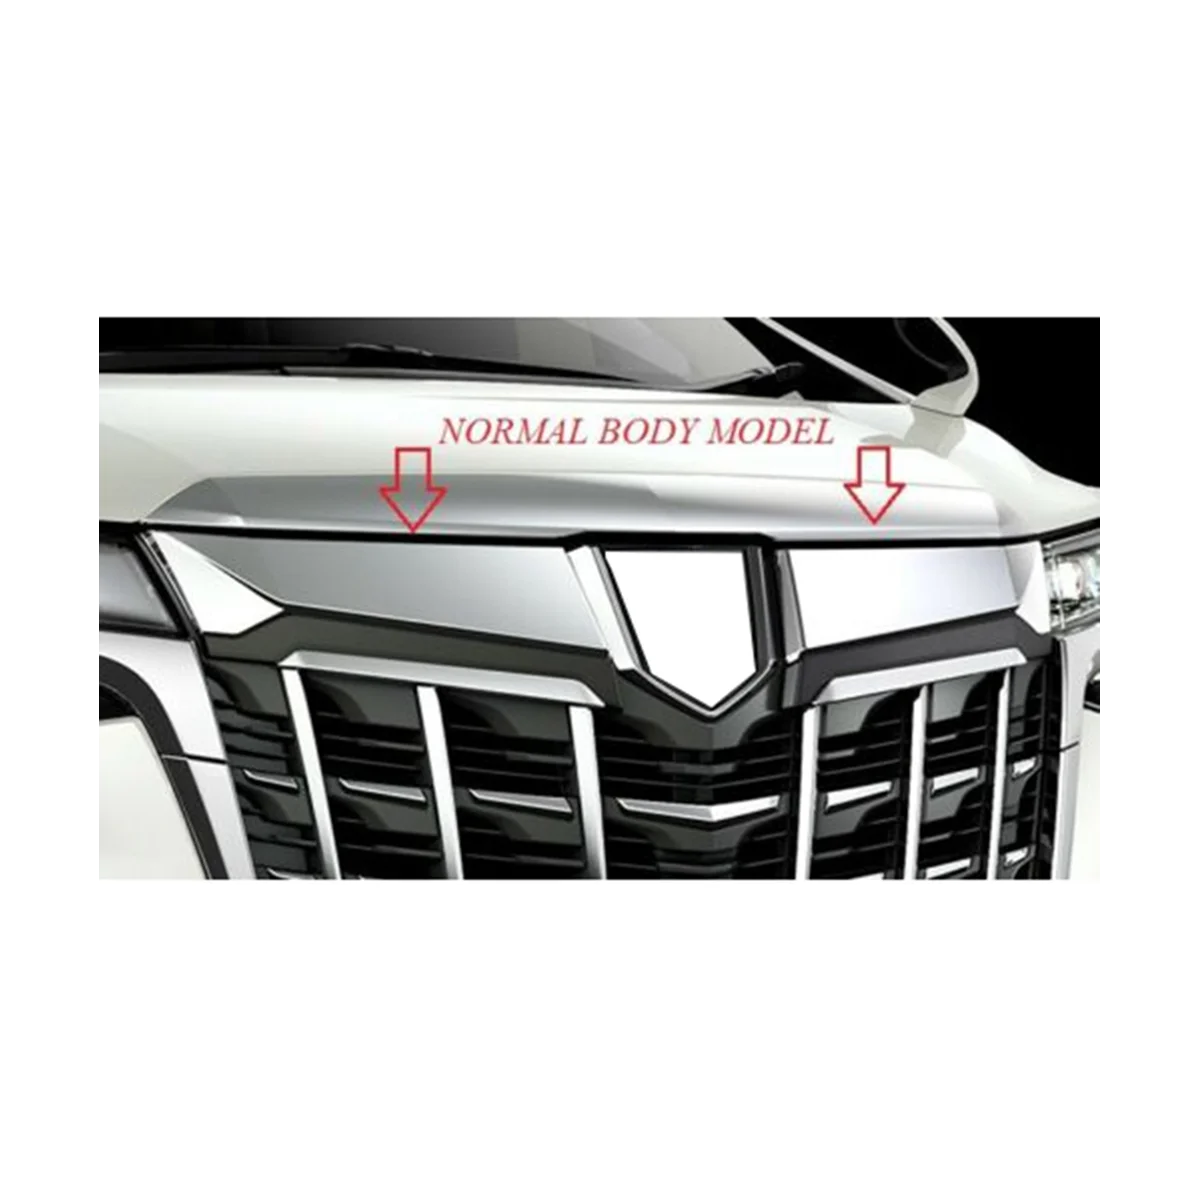 2 елемента преден горен грил капак апликации, бижута за тяло пайети за Toyota Alphard 30 2019